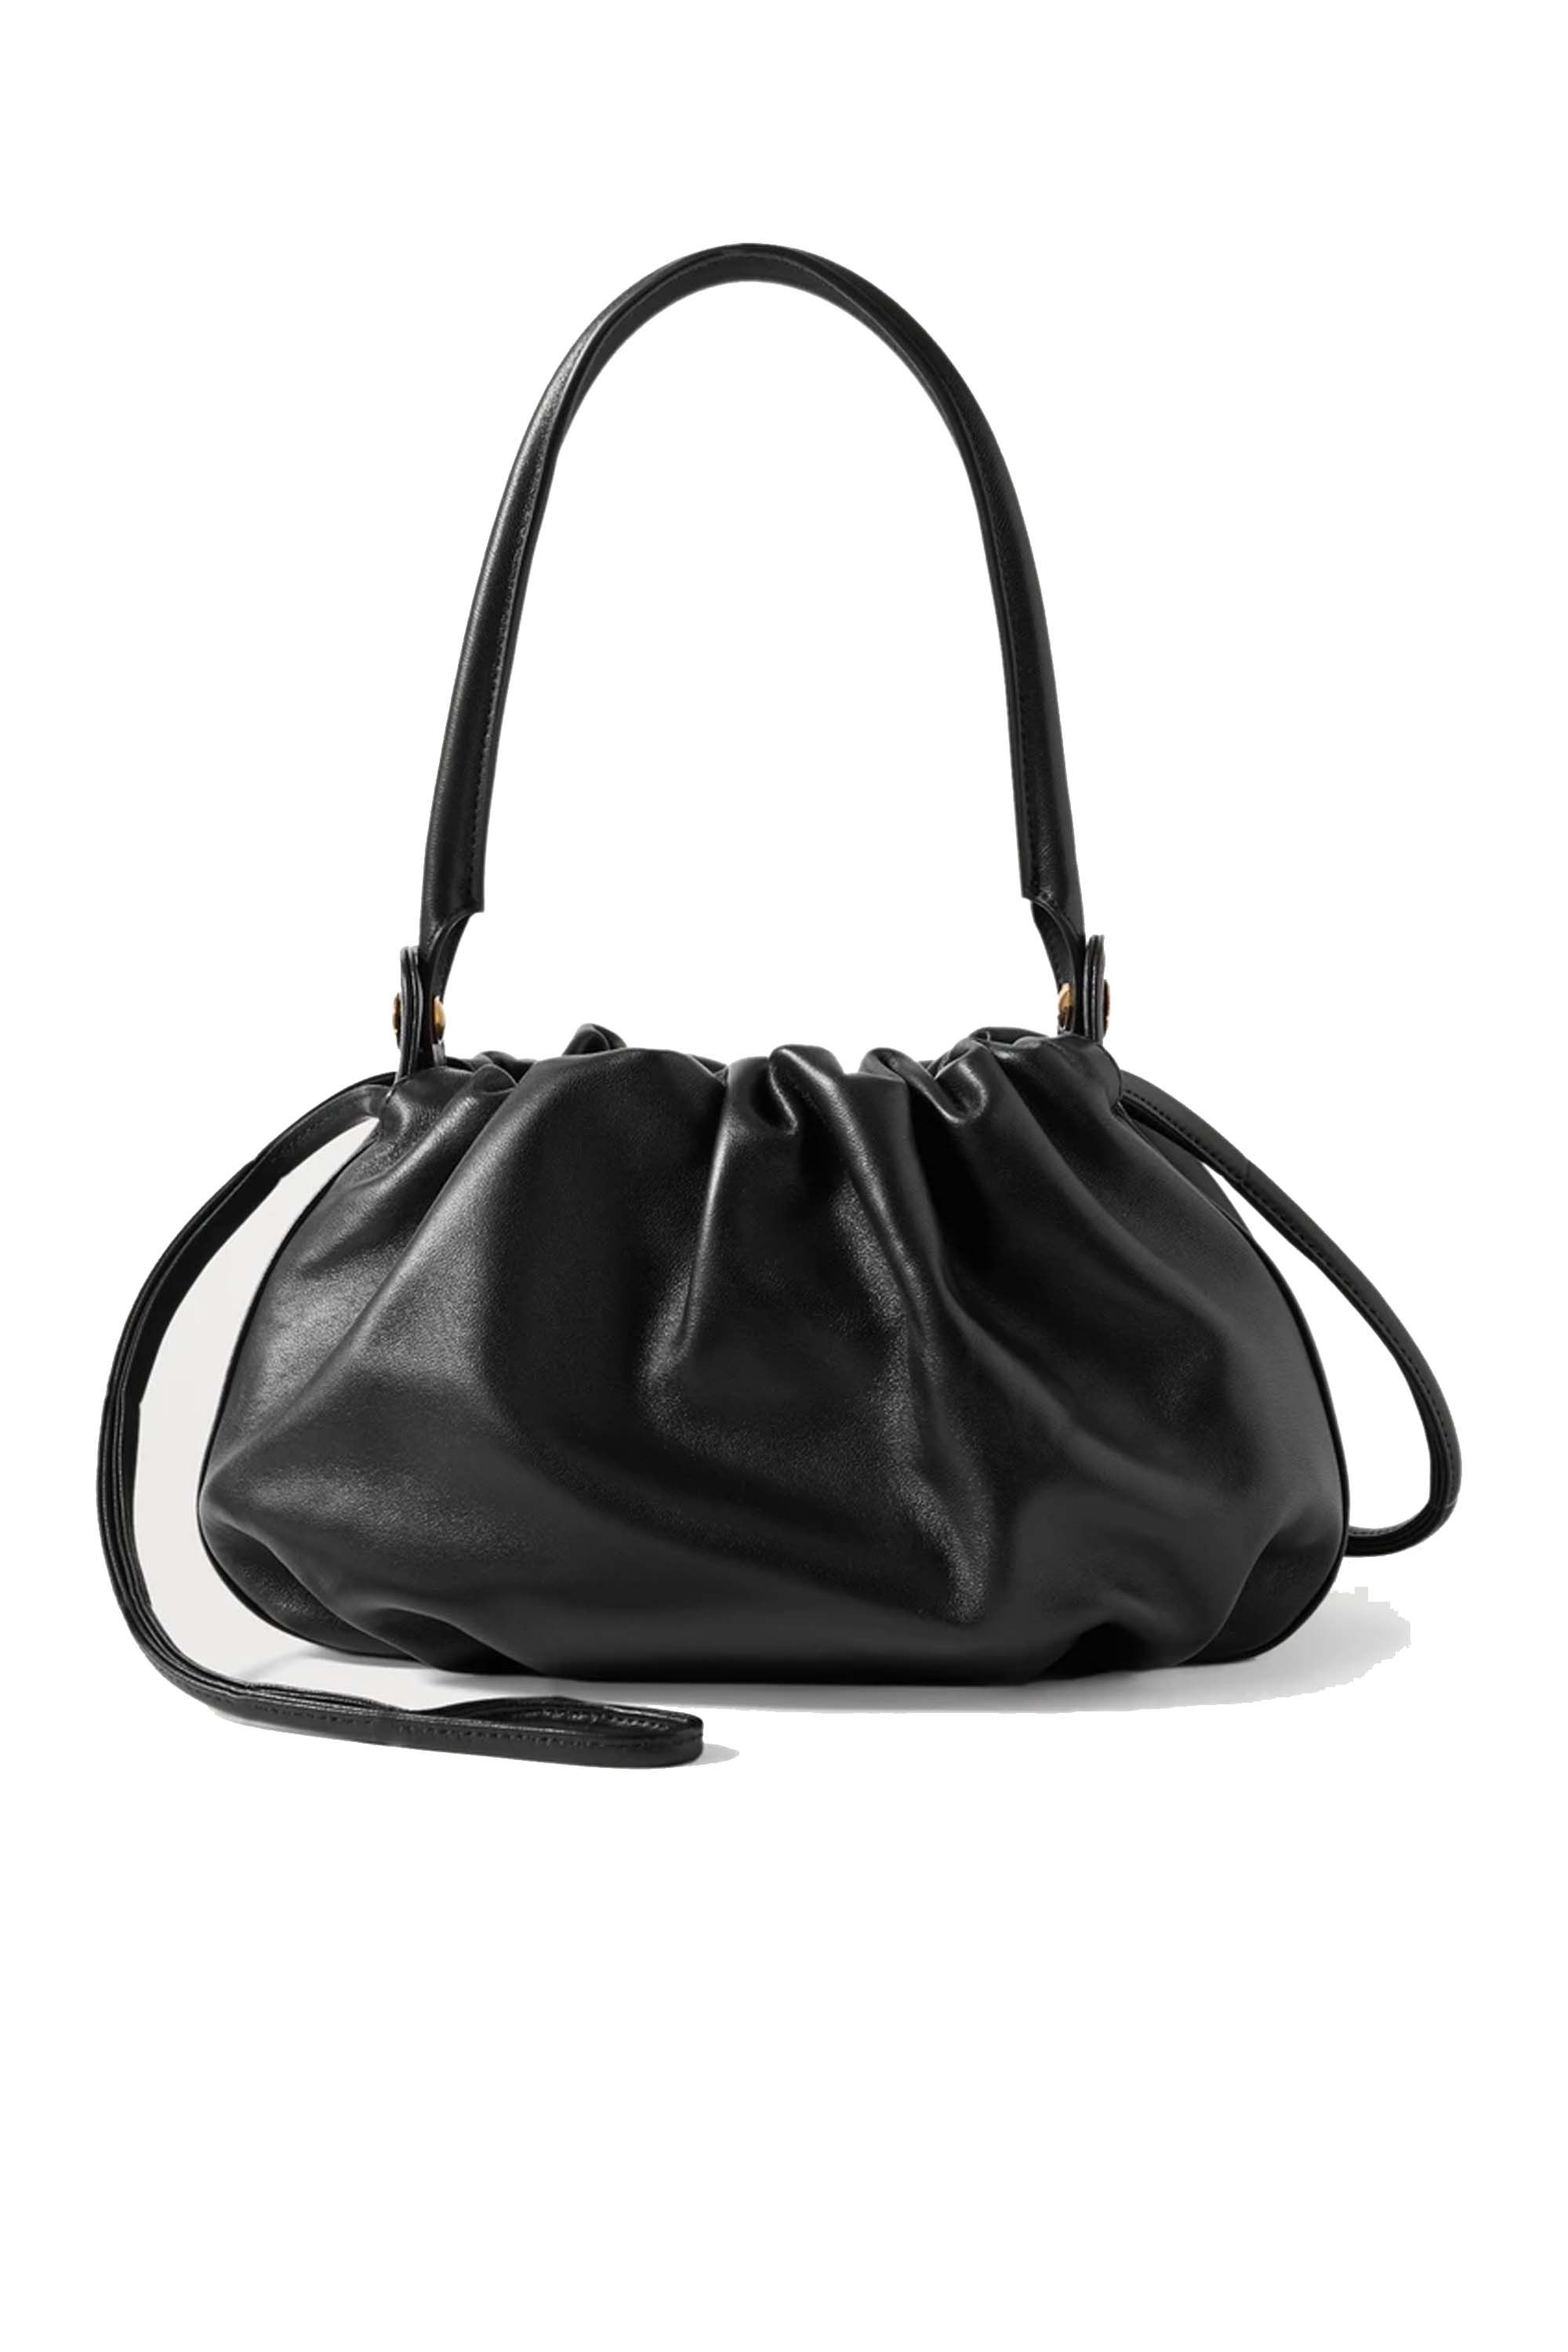 cheap leather handbags